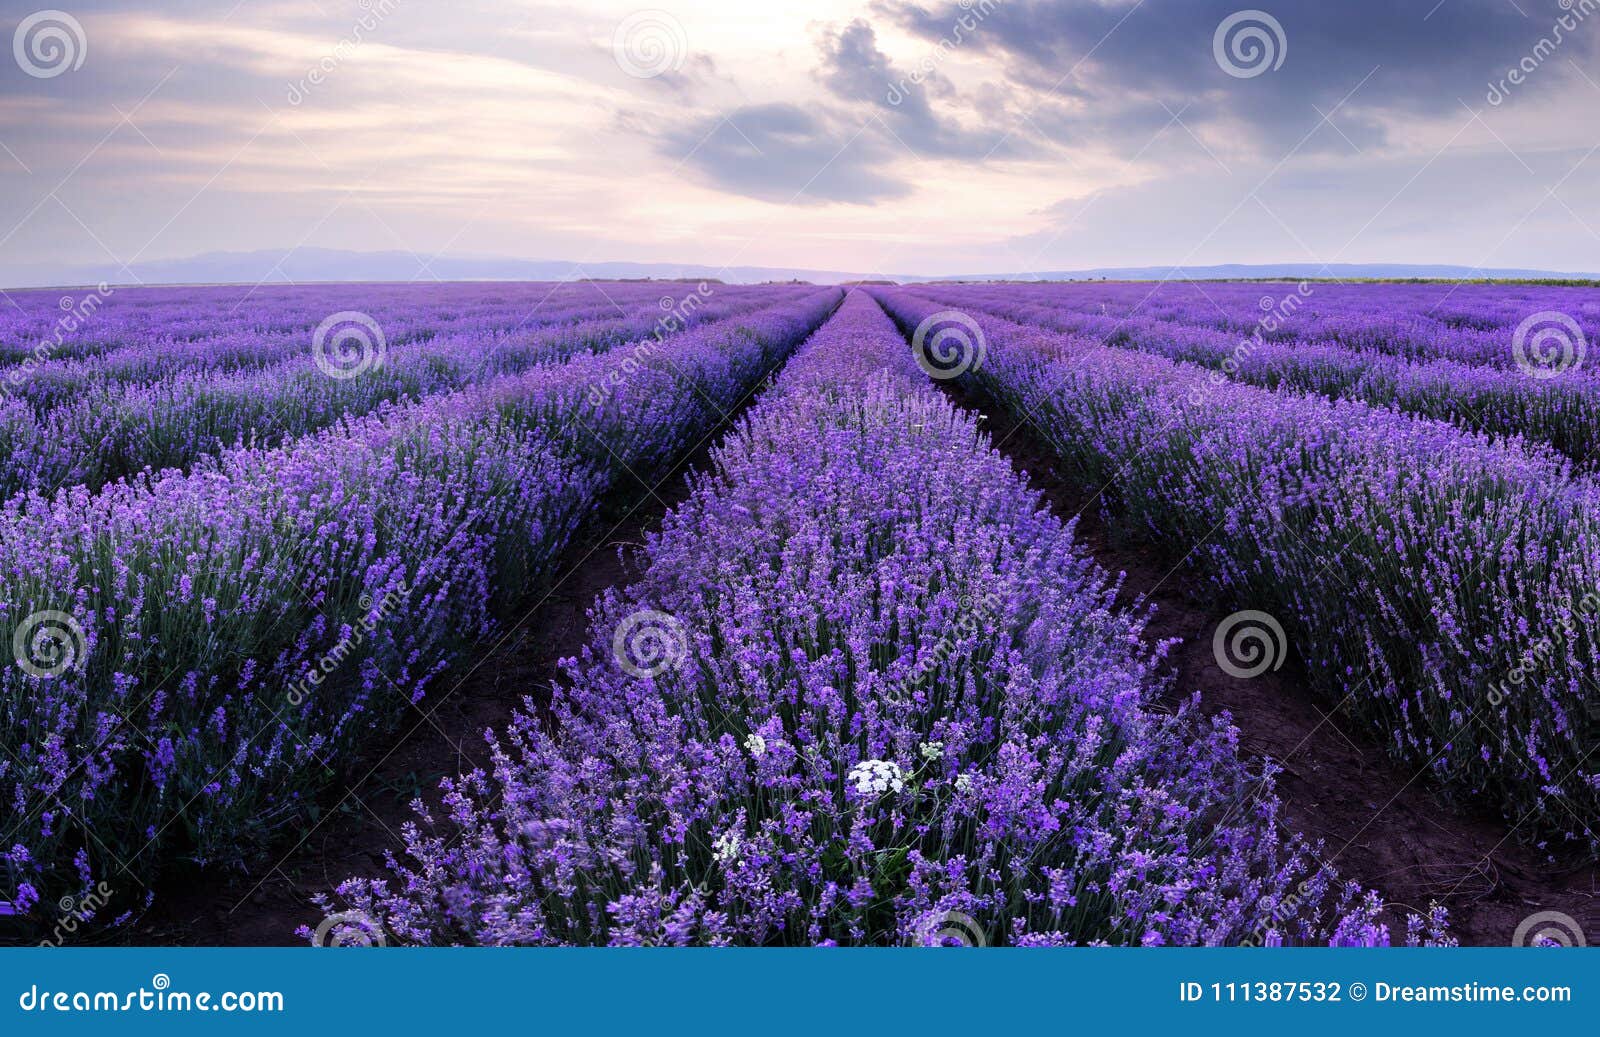 lavender fields. beautiful image of lavender field.